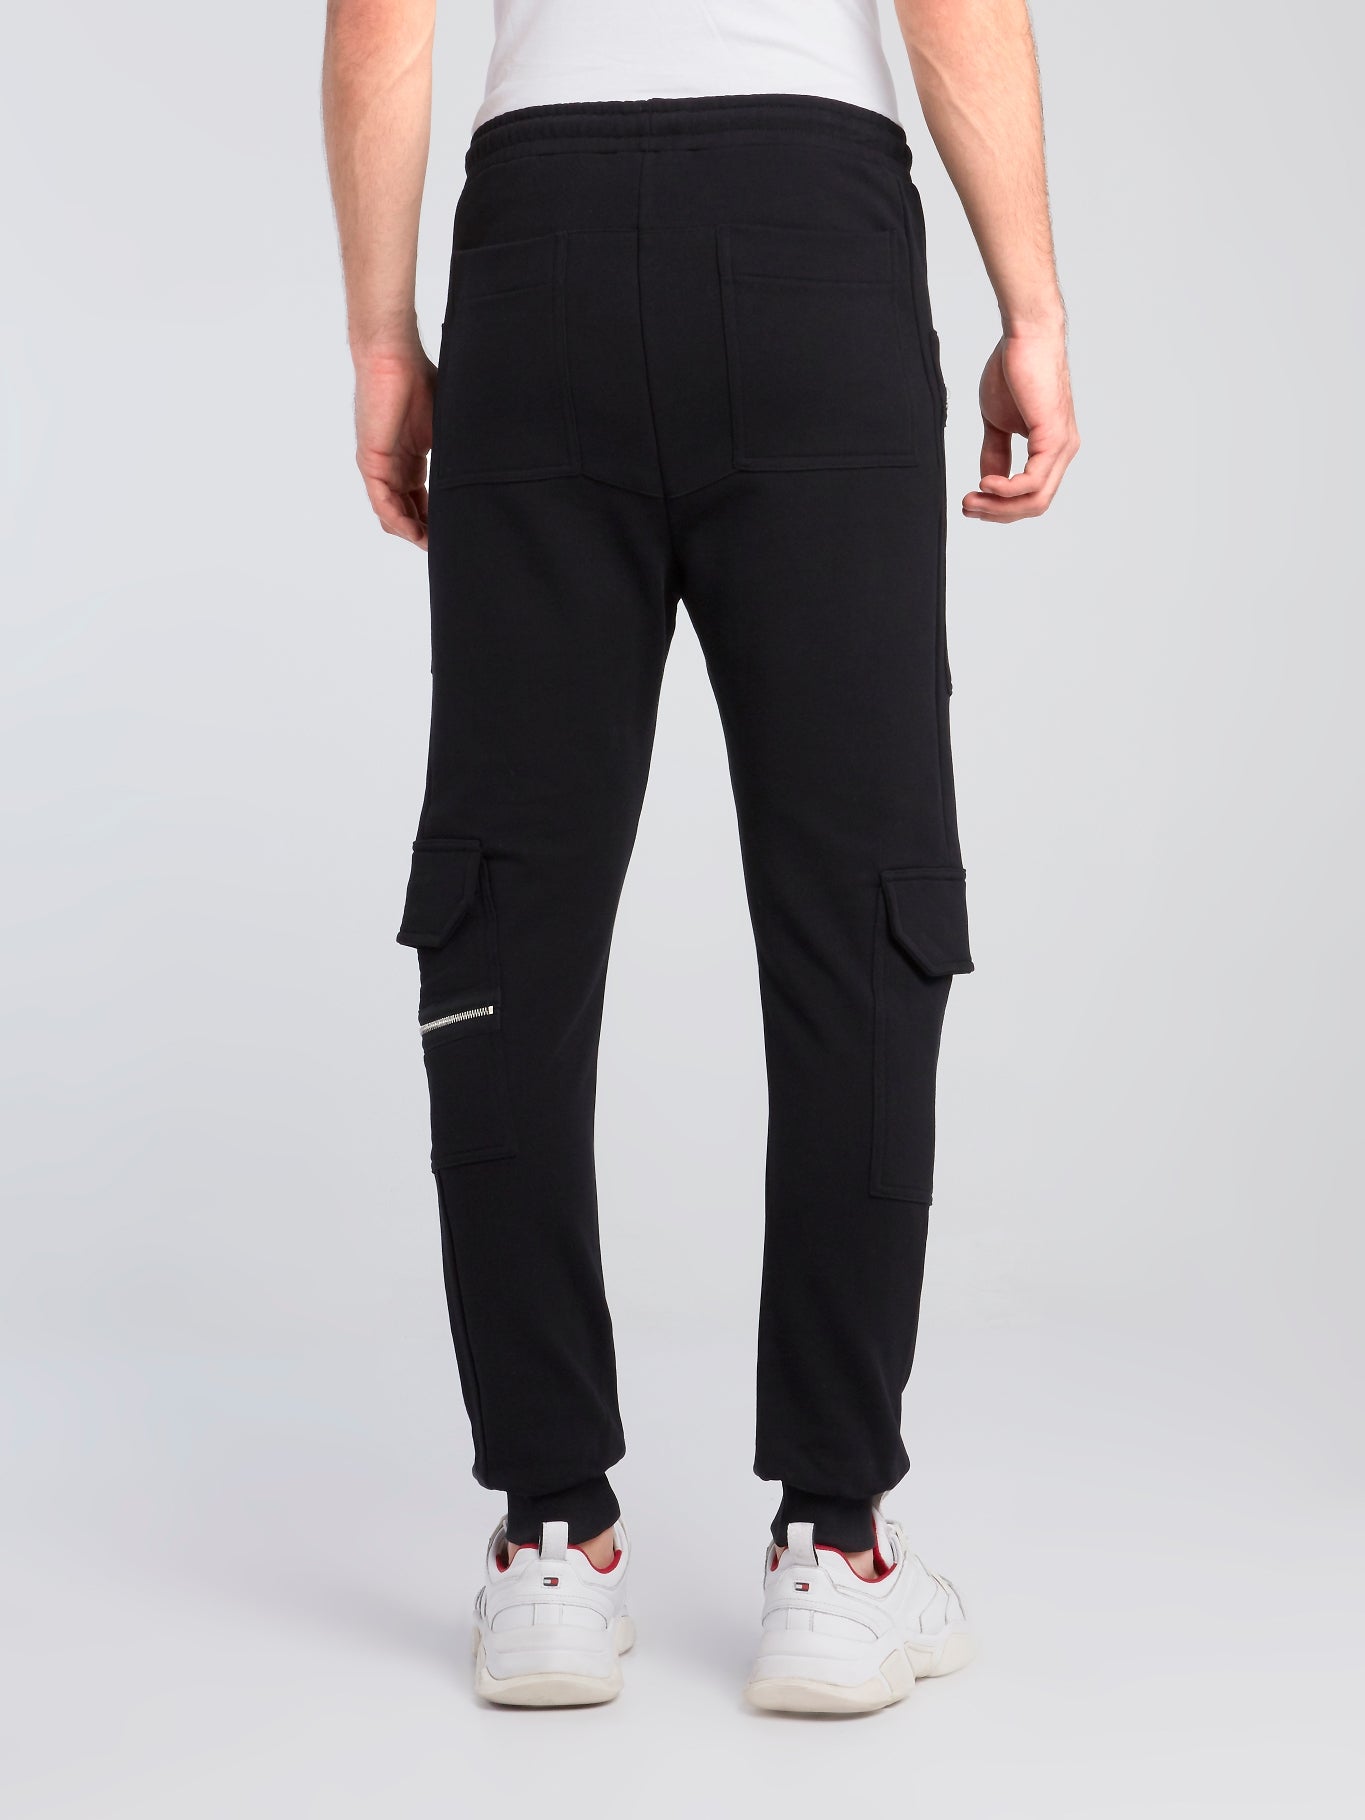 Black Multi-Pocket Track Pants